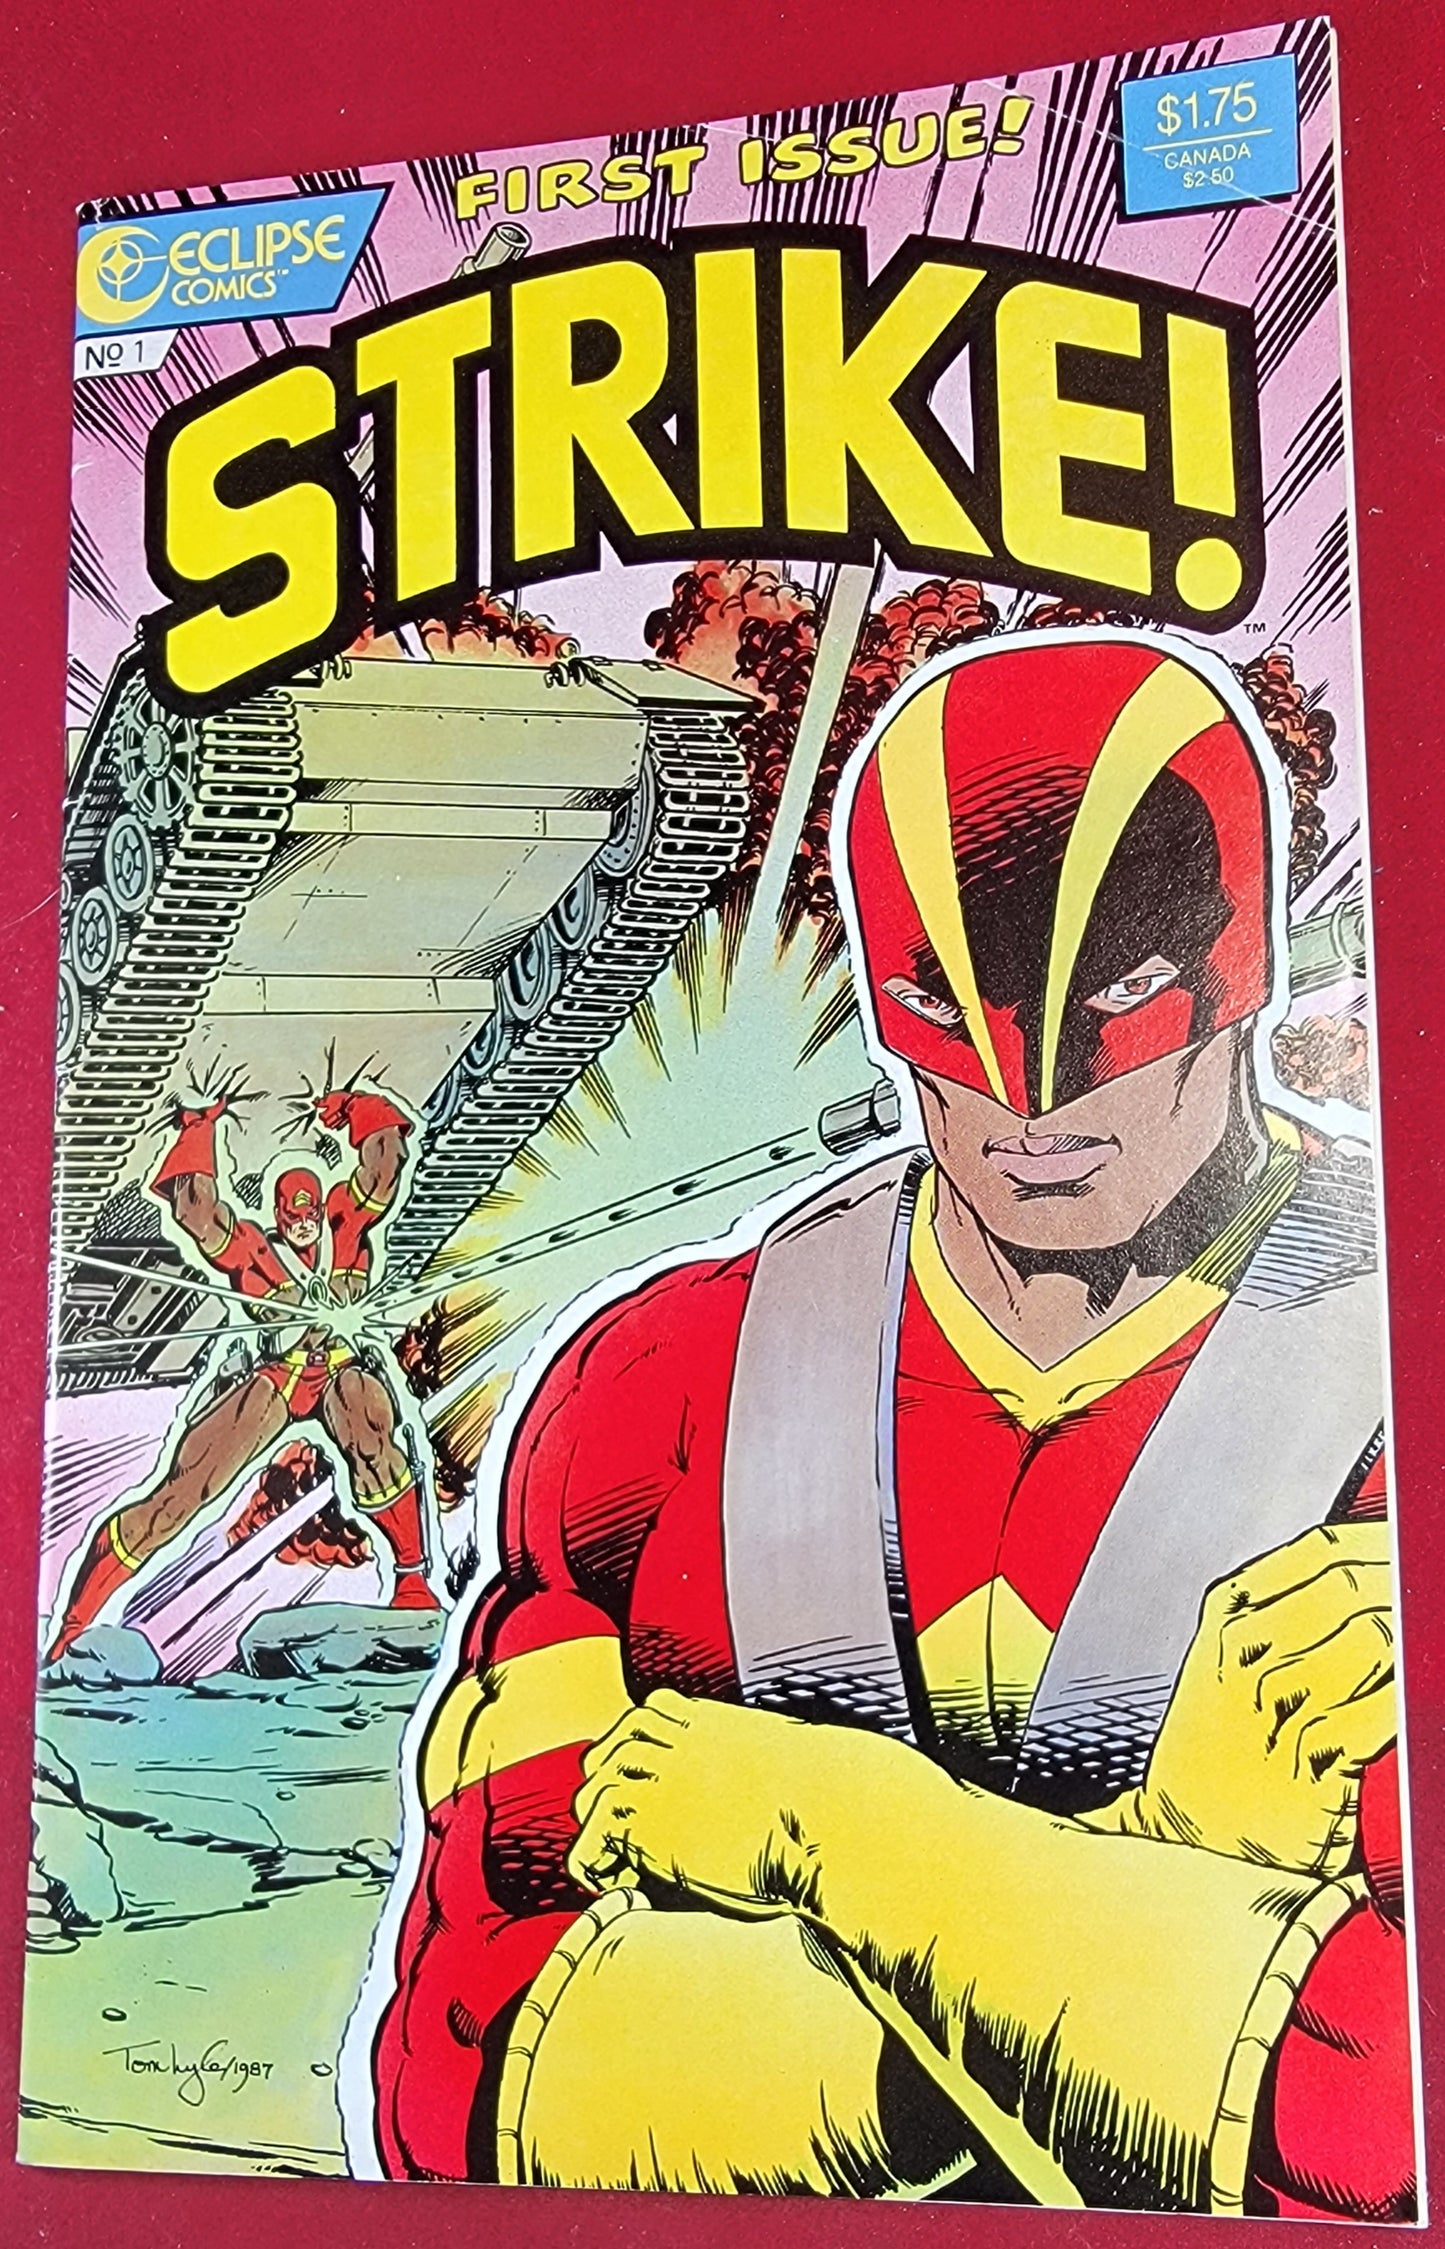 Strike eclipse comics no 1 (1987)